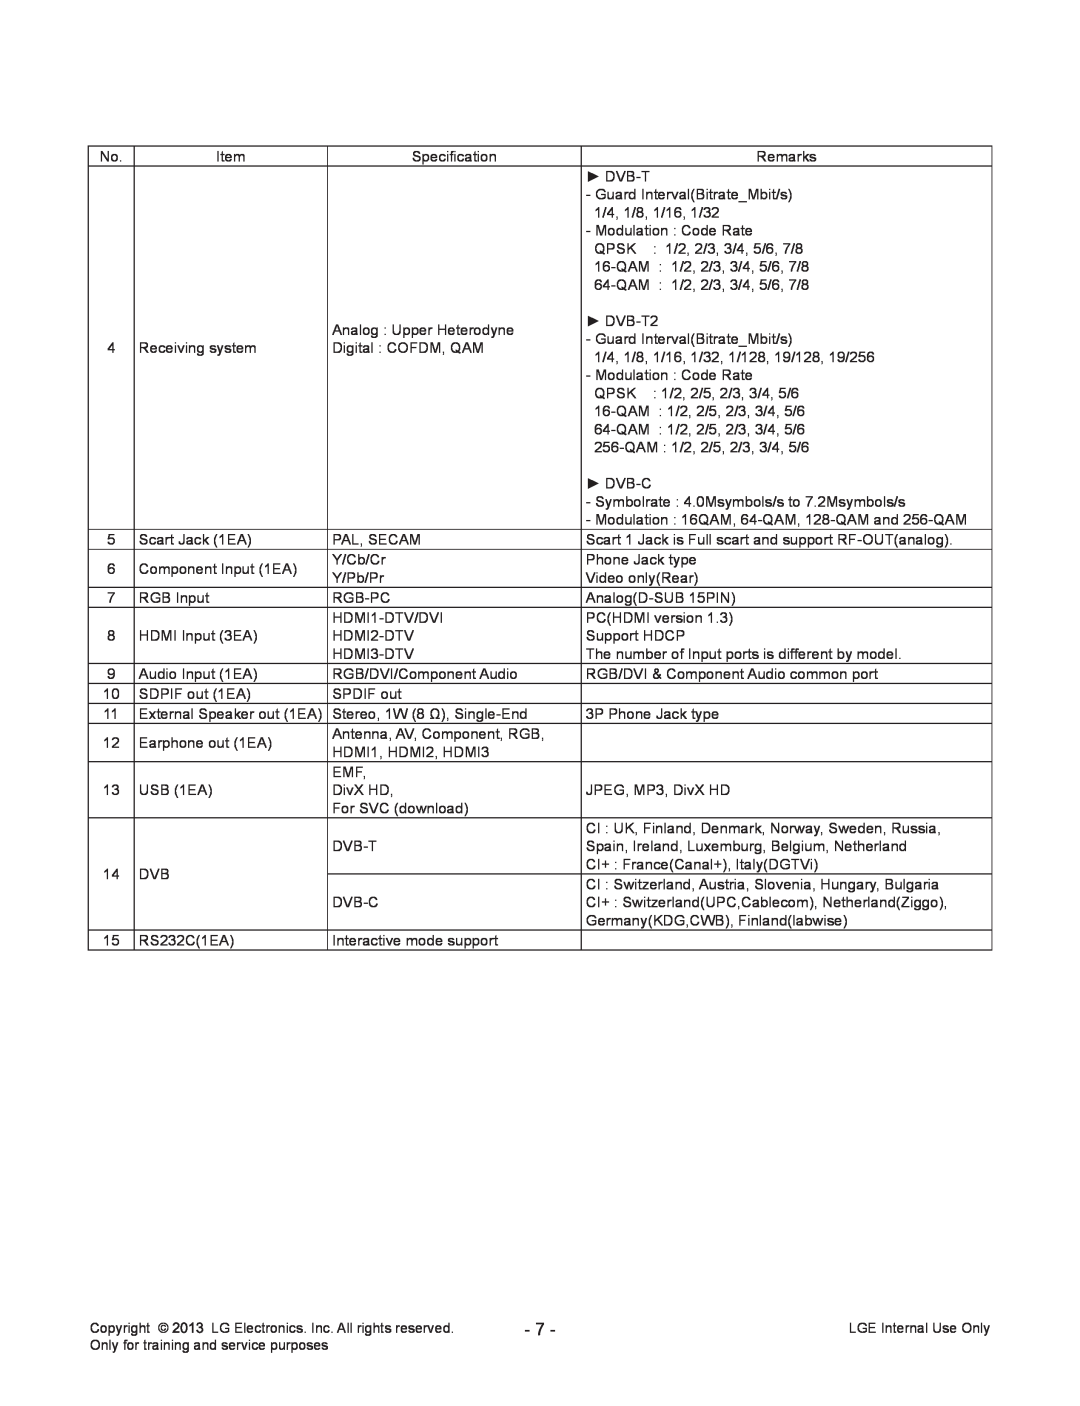 LG Electronics 361H-ZA Specification, Remarks, Dvb-T, Guard IntervalBitrateMbit/s, 1/4, 1/8, 1/16, 1/32, Qpsk, 16-QAM 